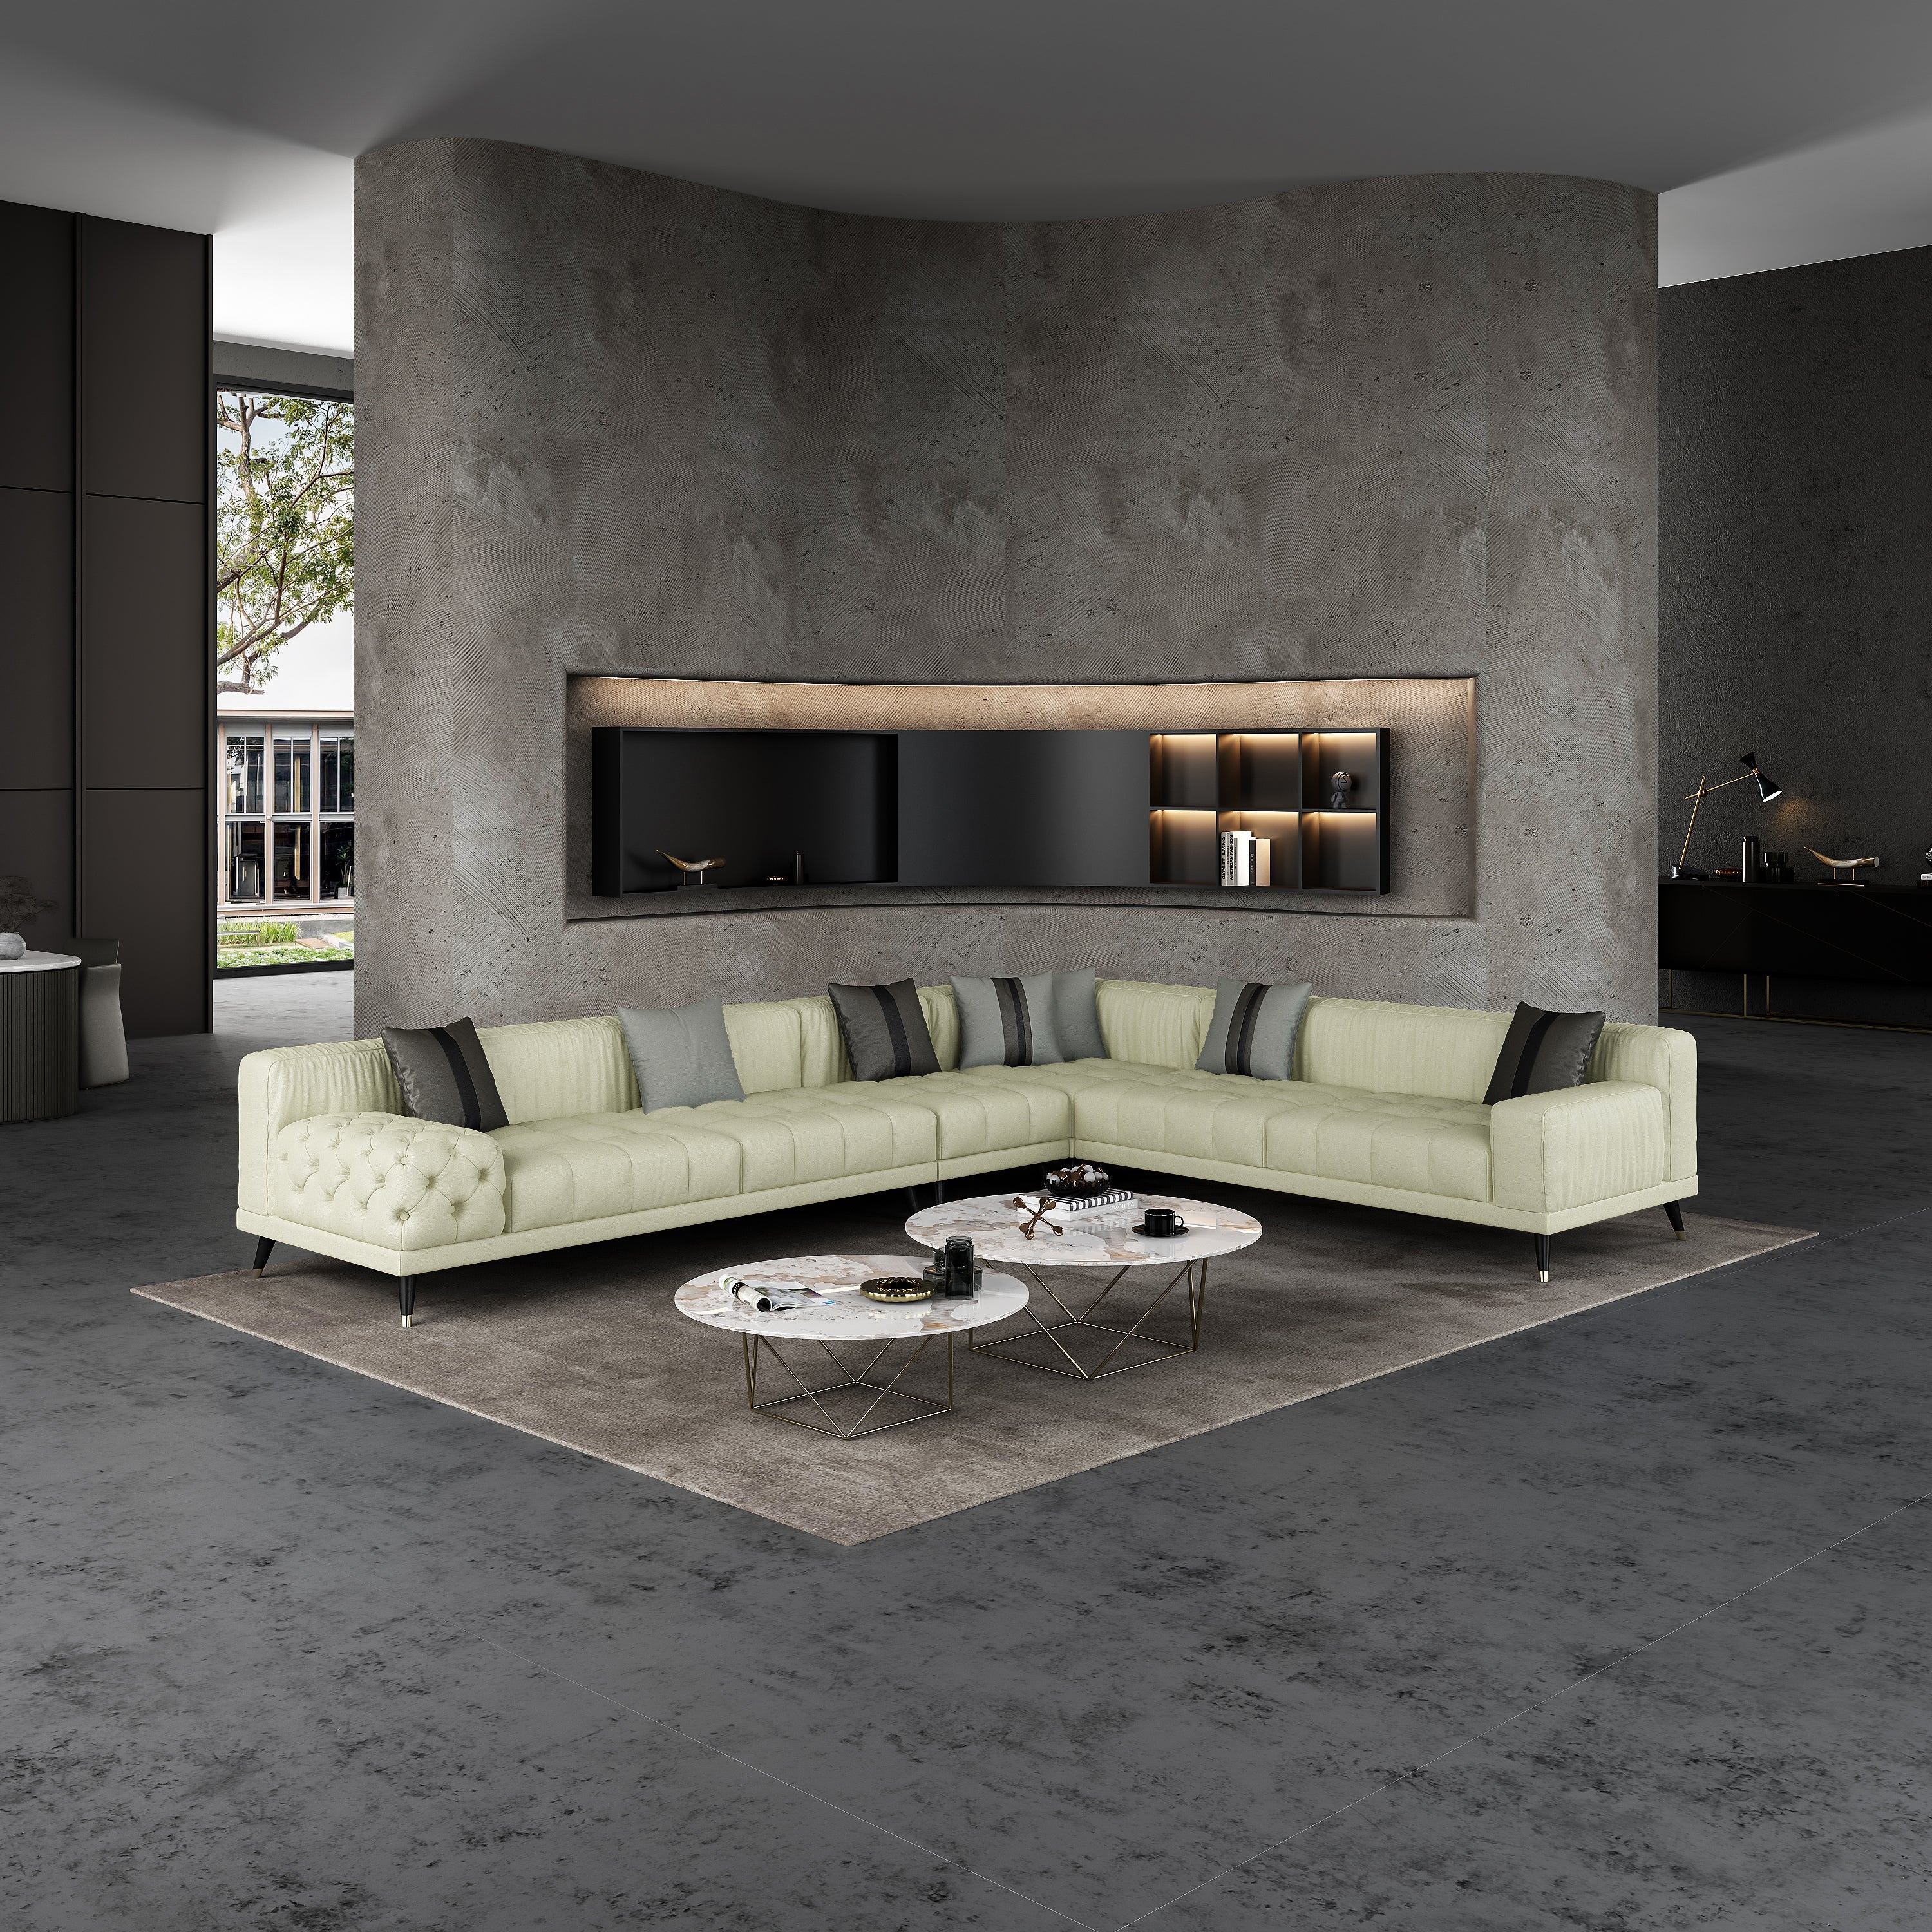 European Furniture - Outlander Modular Sectional Off White Italian Leather - EF-88887-4PC - New Star Living